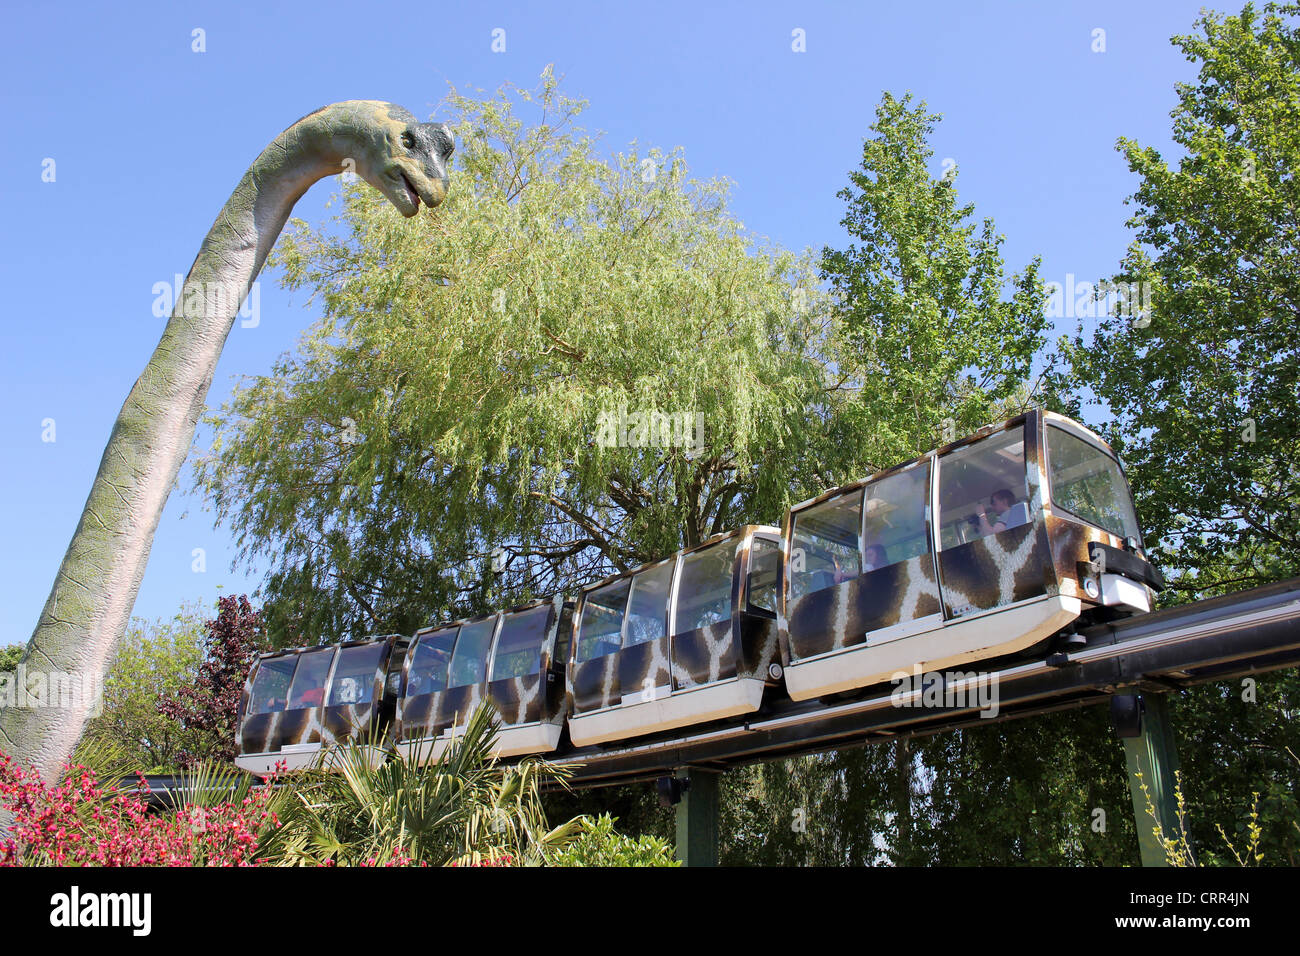 Brachiosaurus Dinosaur Model Peering Down On Monorail Train At Chester Zoo, UK Stock Photo